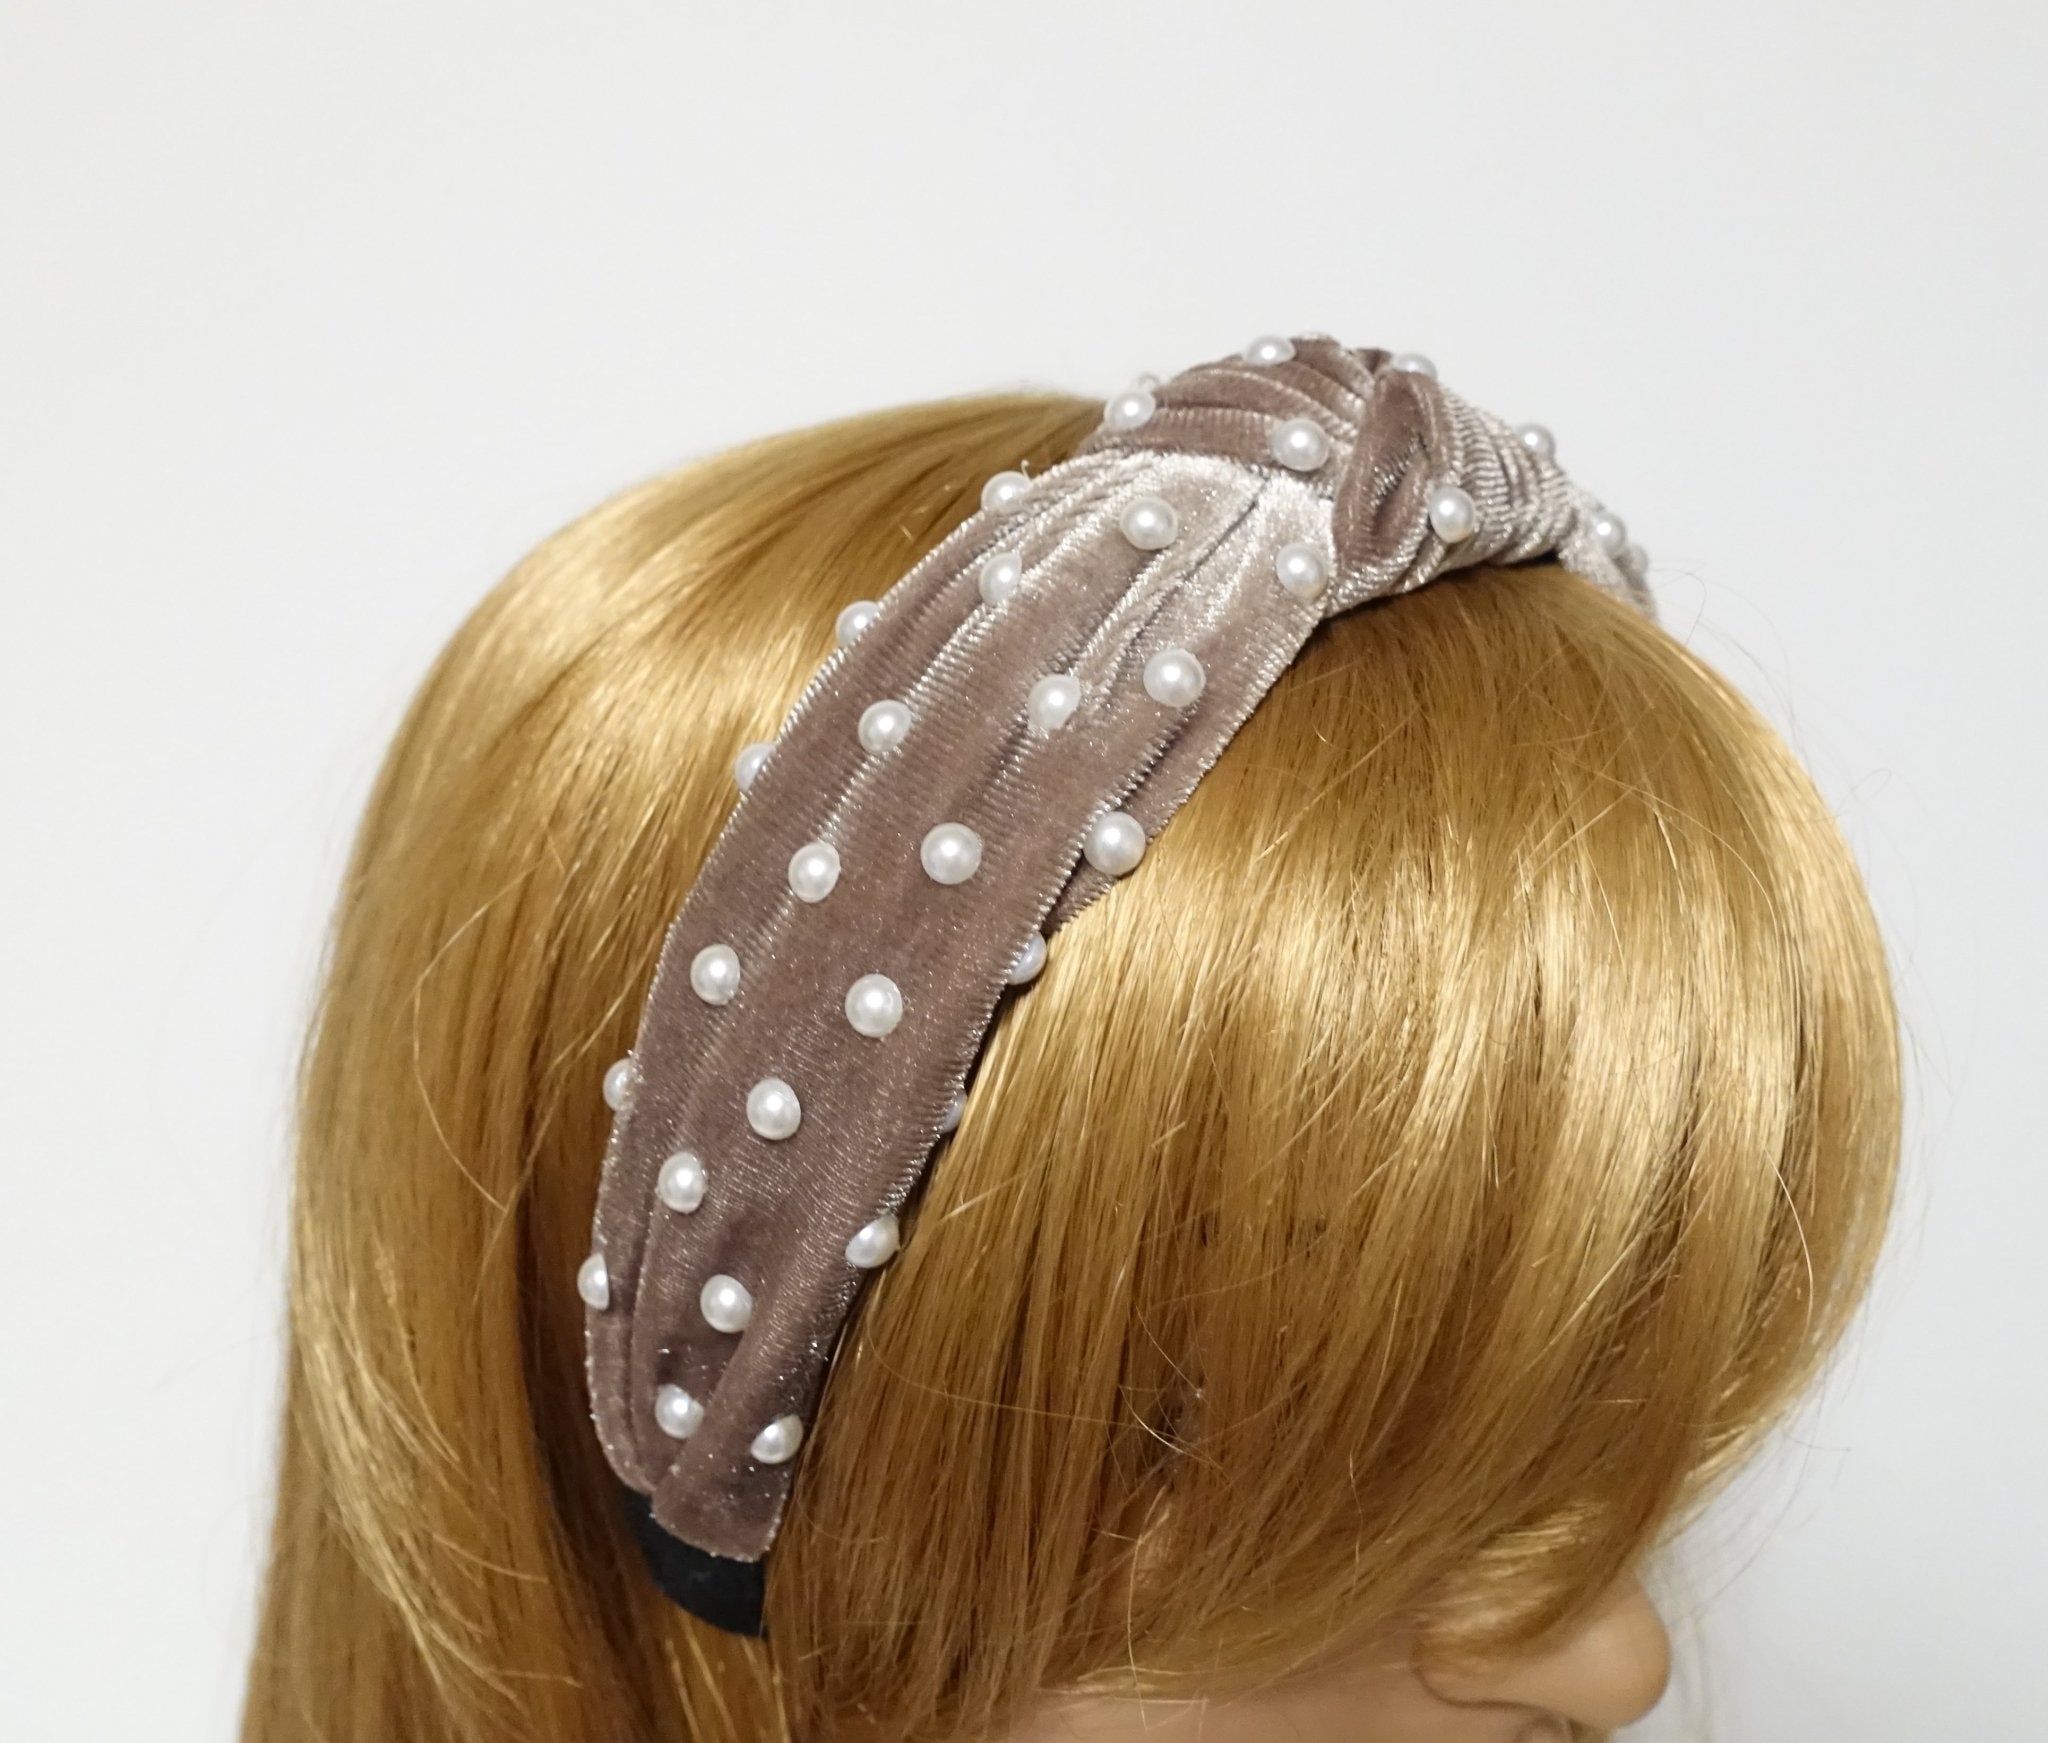 veryshine.com hairband/headband faux pearl decorated velvet fashion headband for women